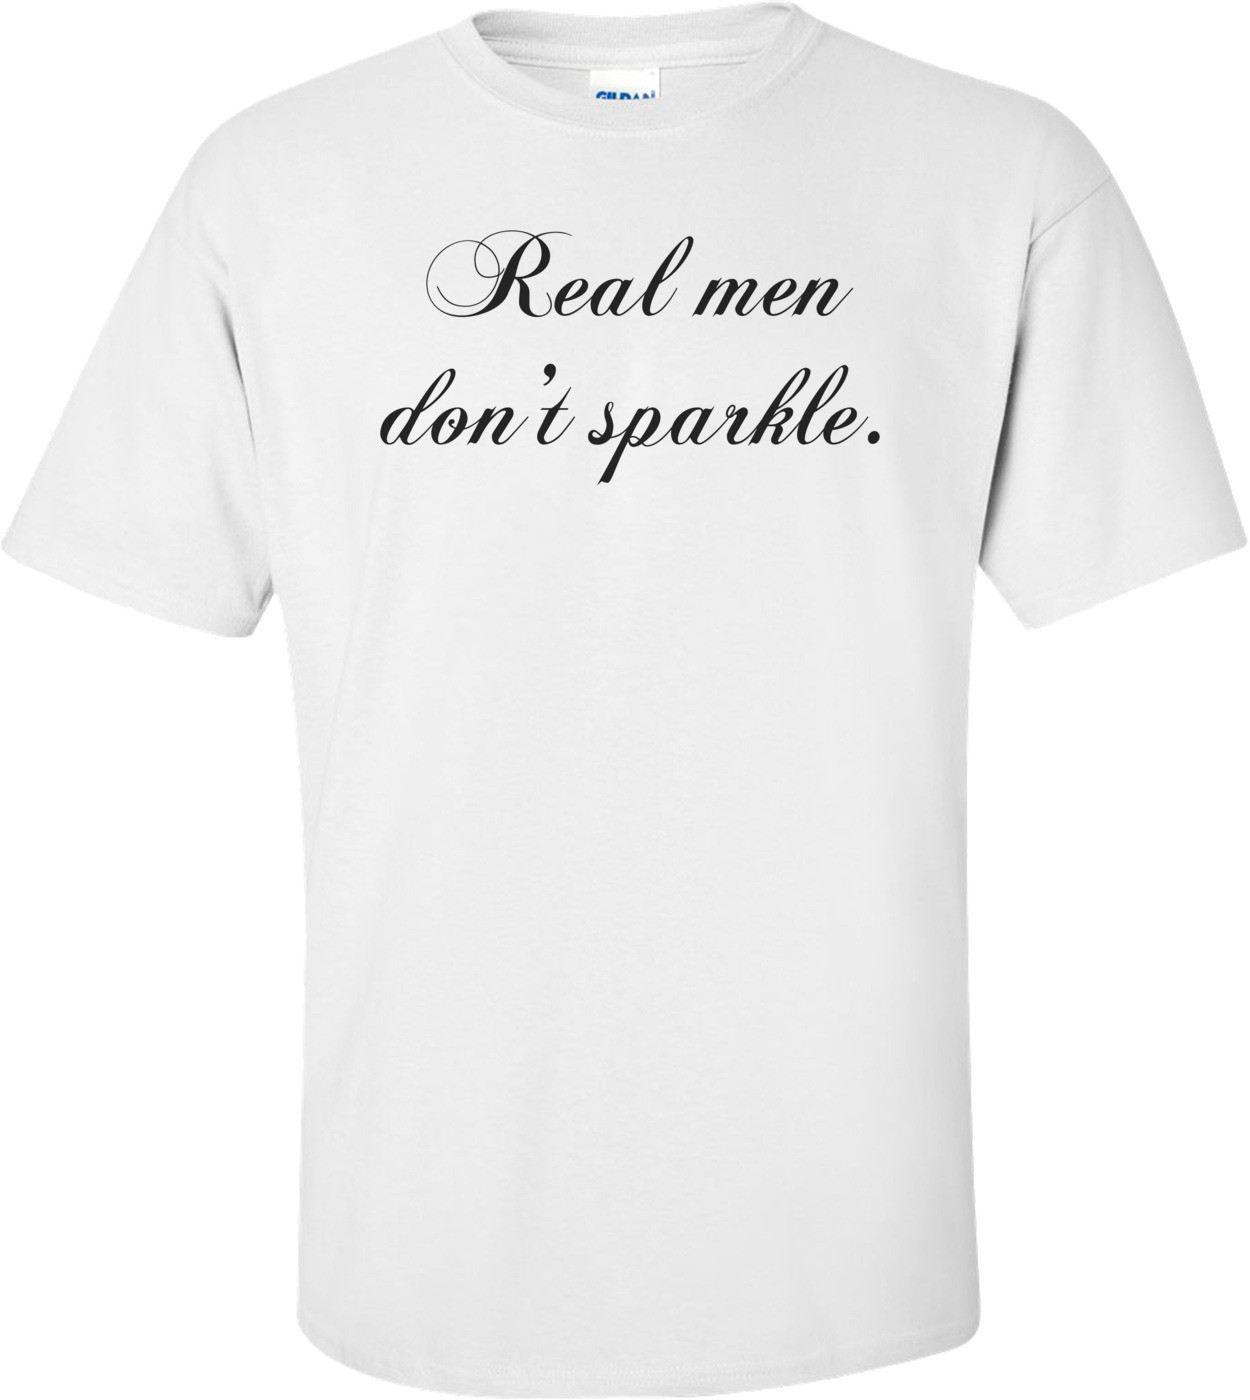 Real Men Don't Sparkle. Shirt